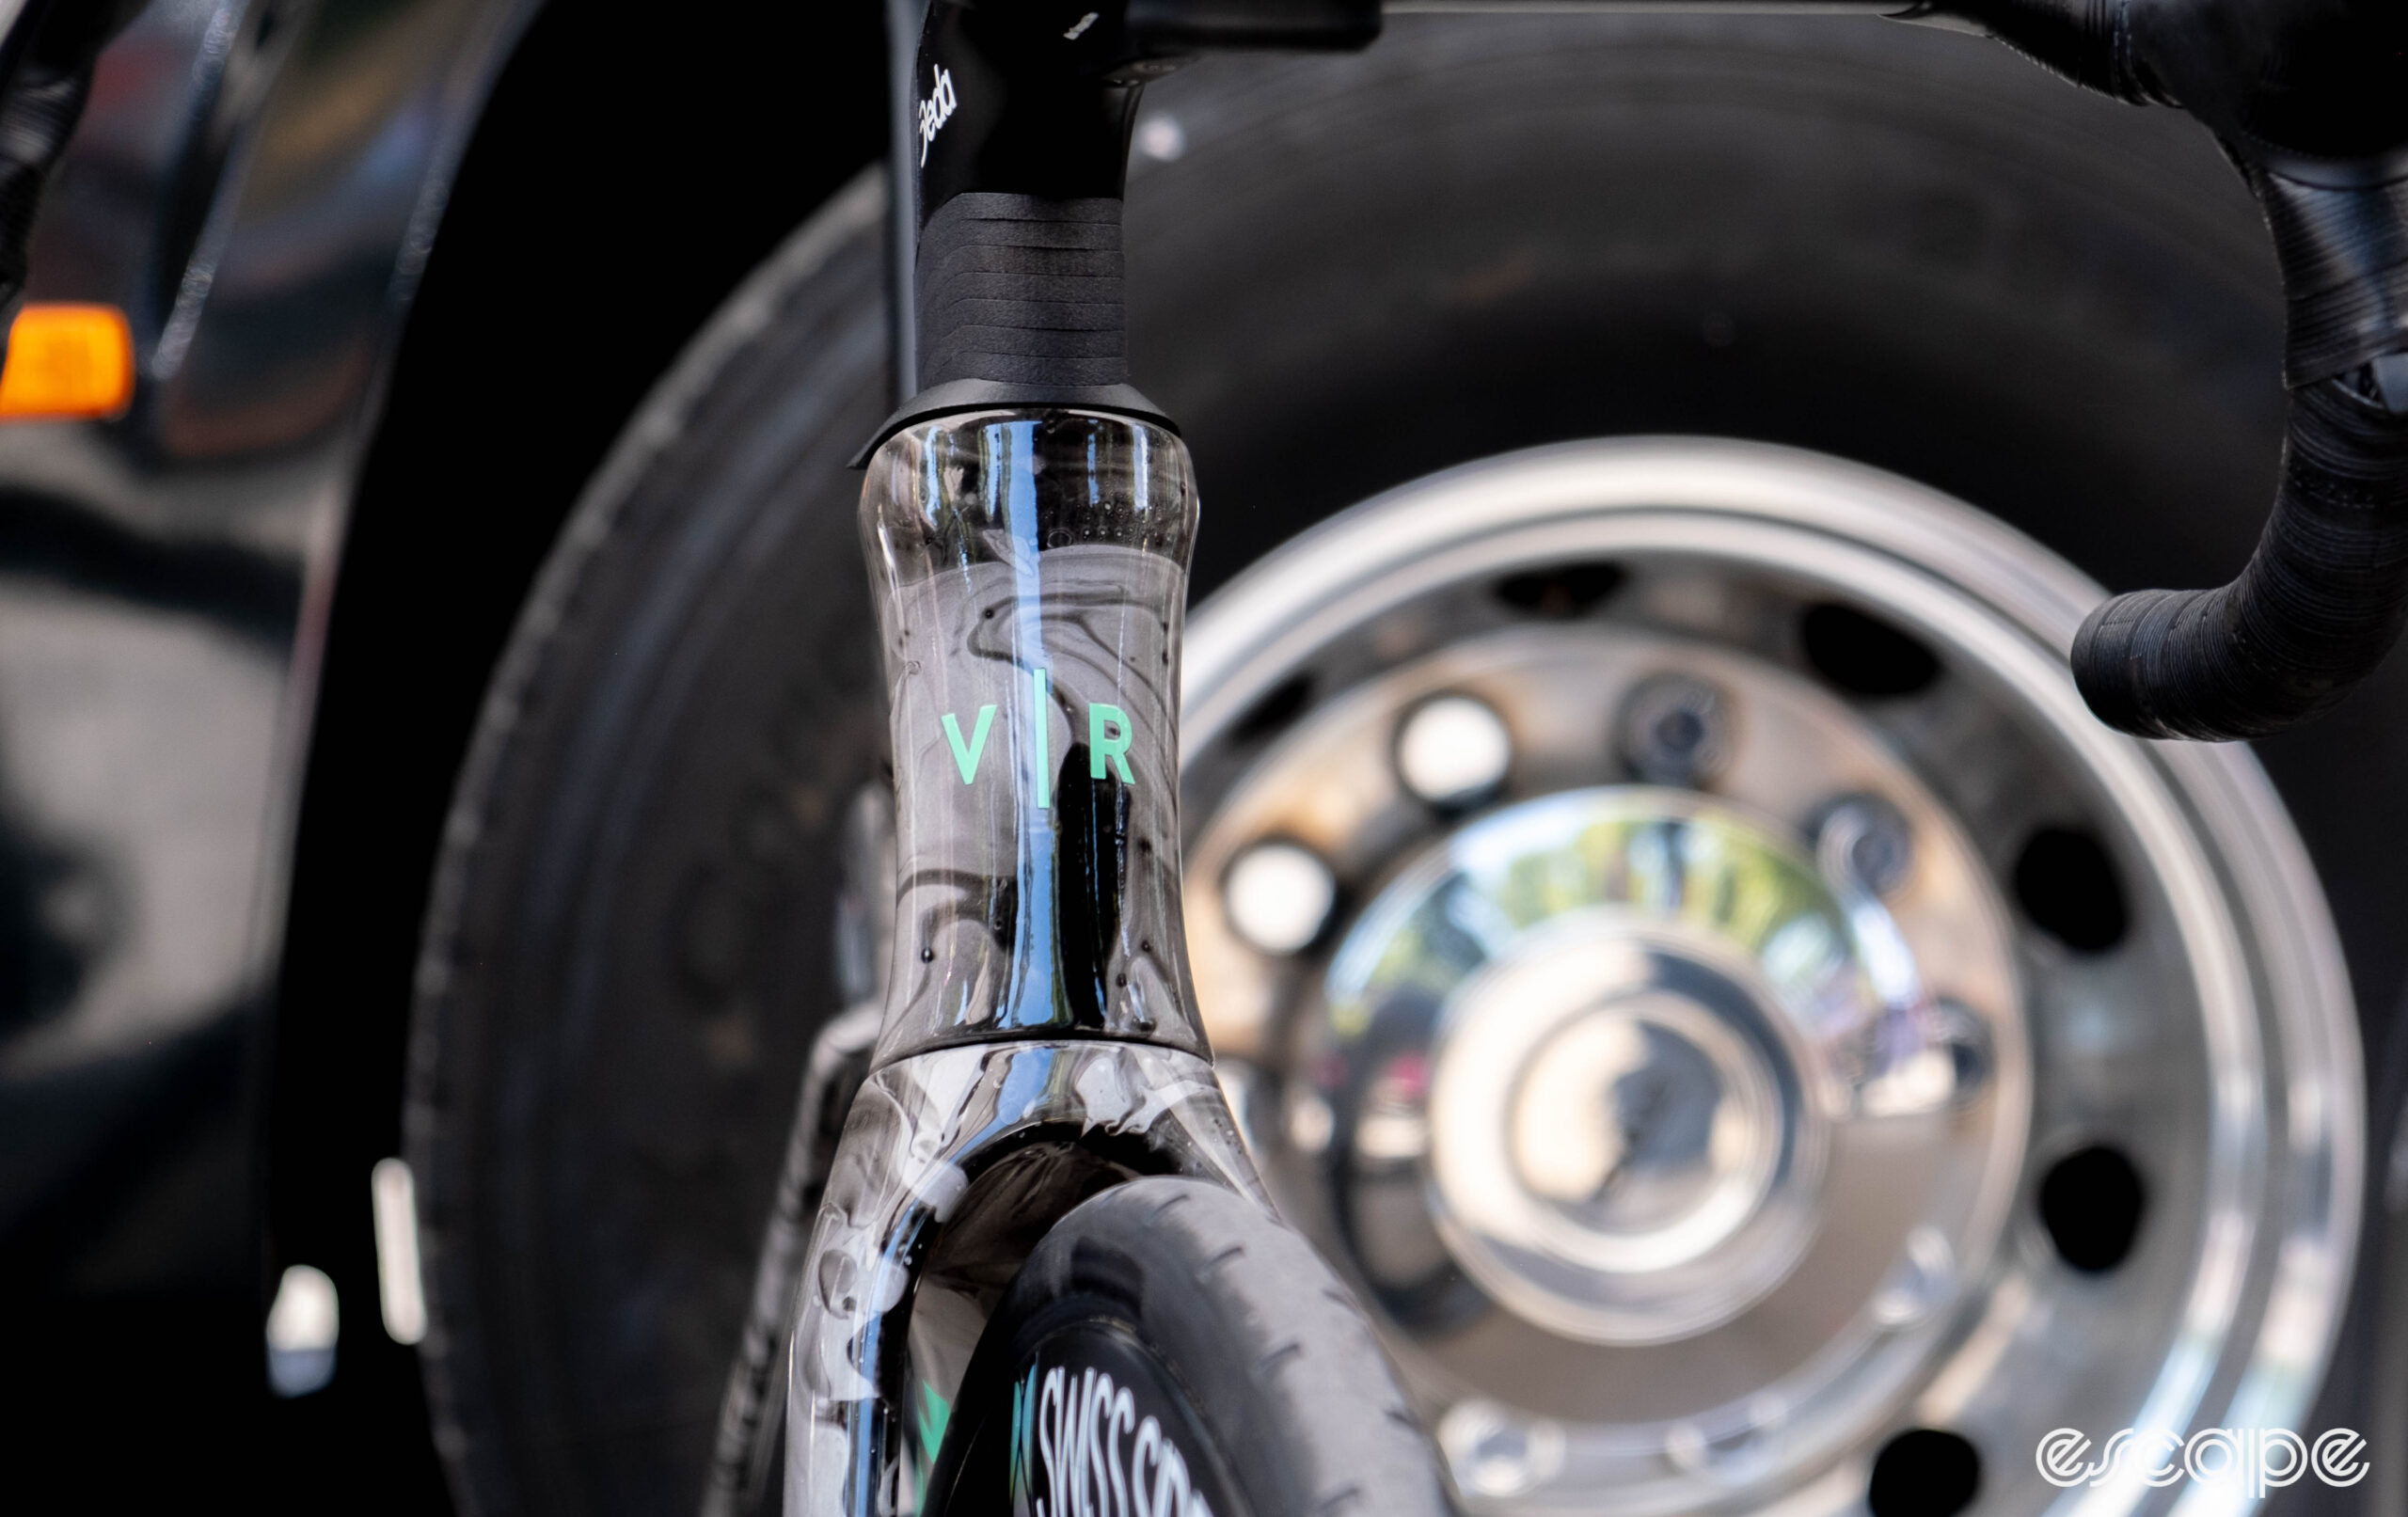 The photo shows Van Rysel's new FCR Pro aero bike head tube